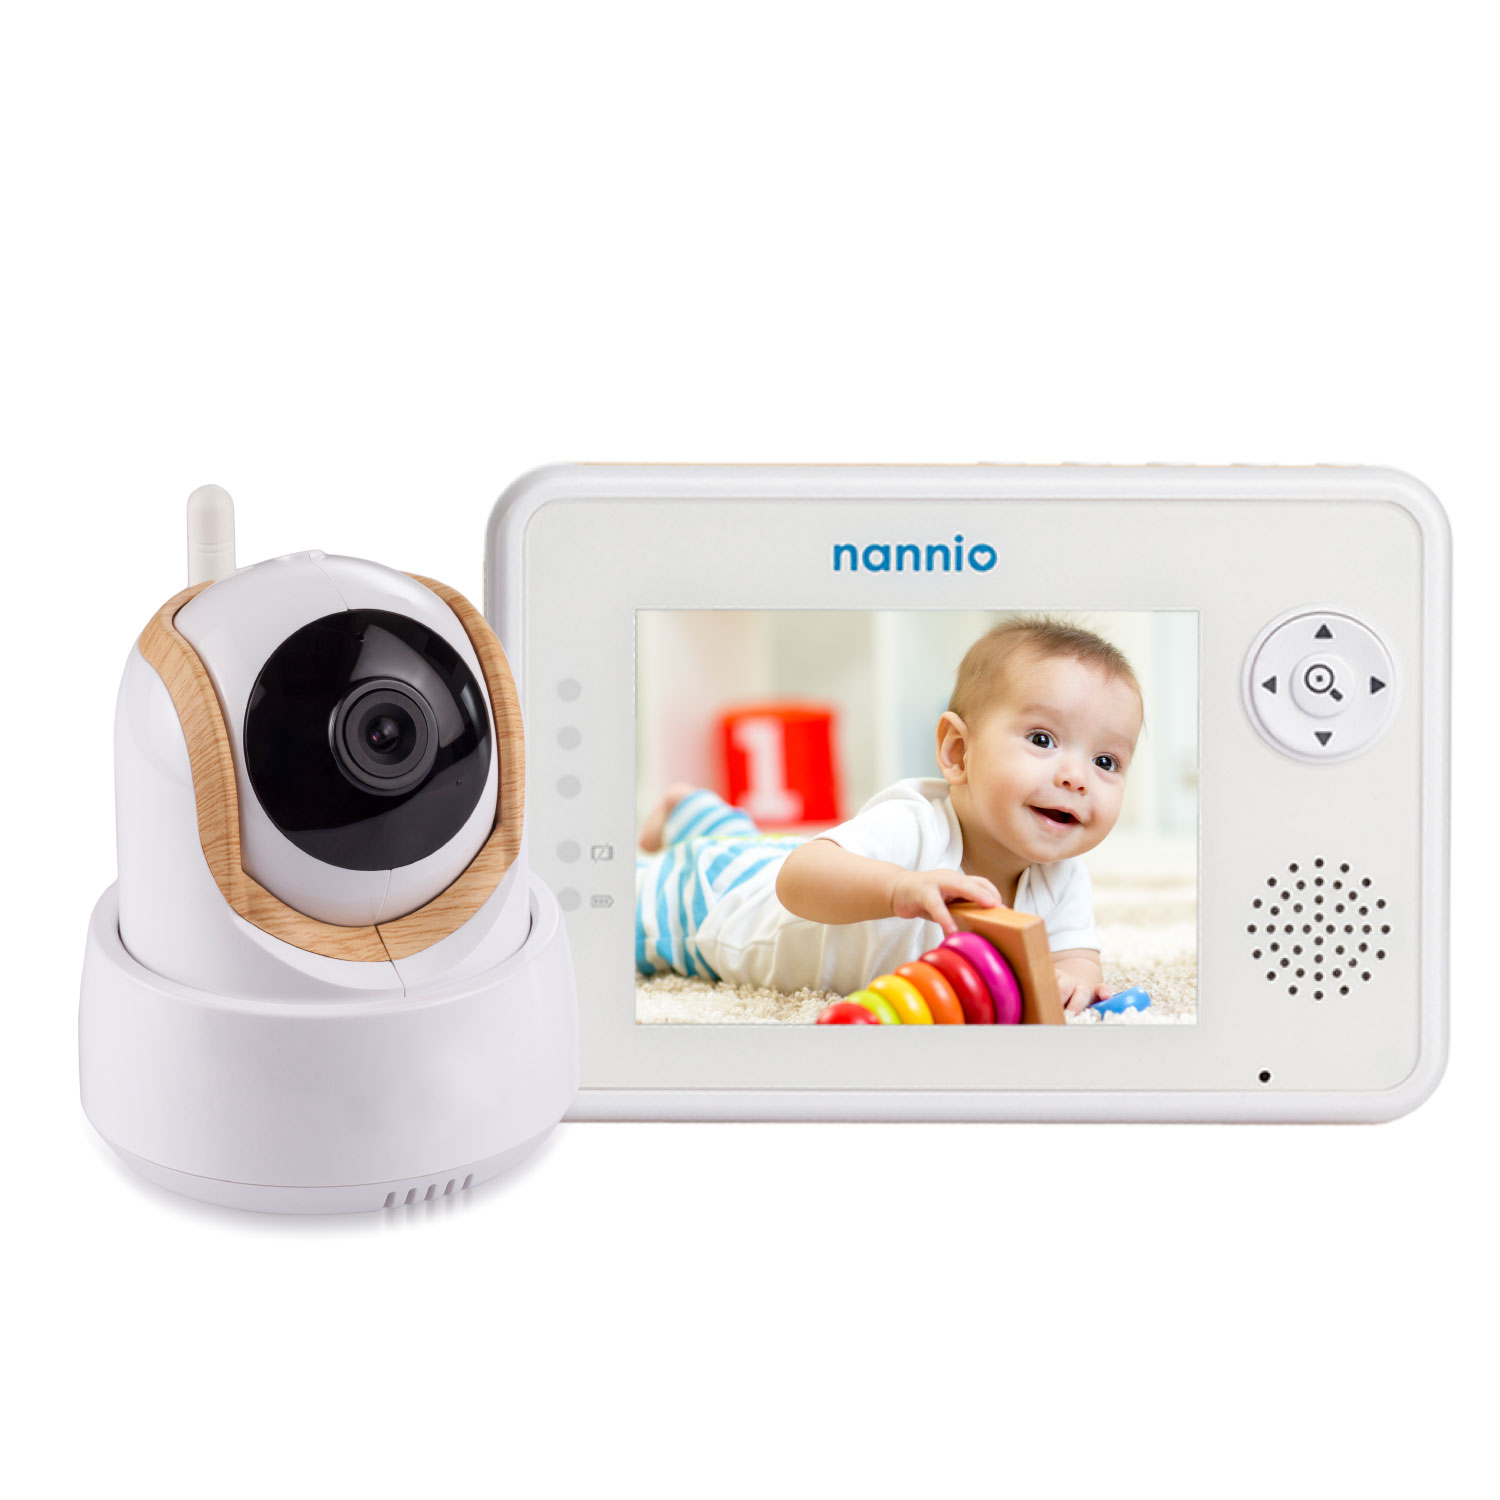 nannio comfy video baby monitor